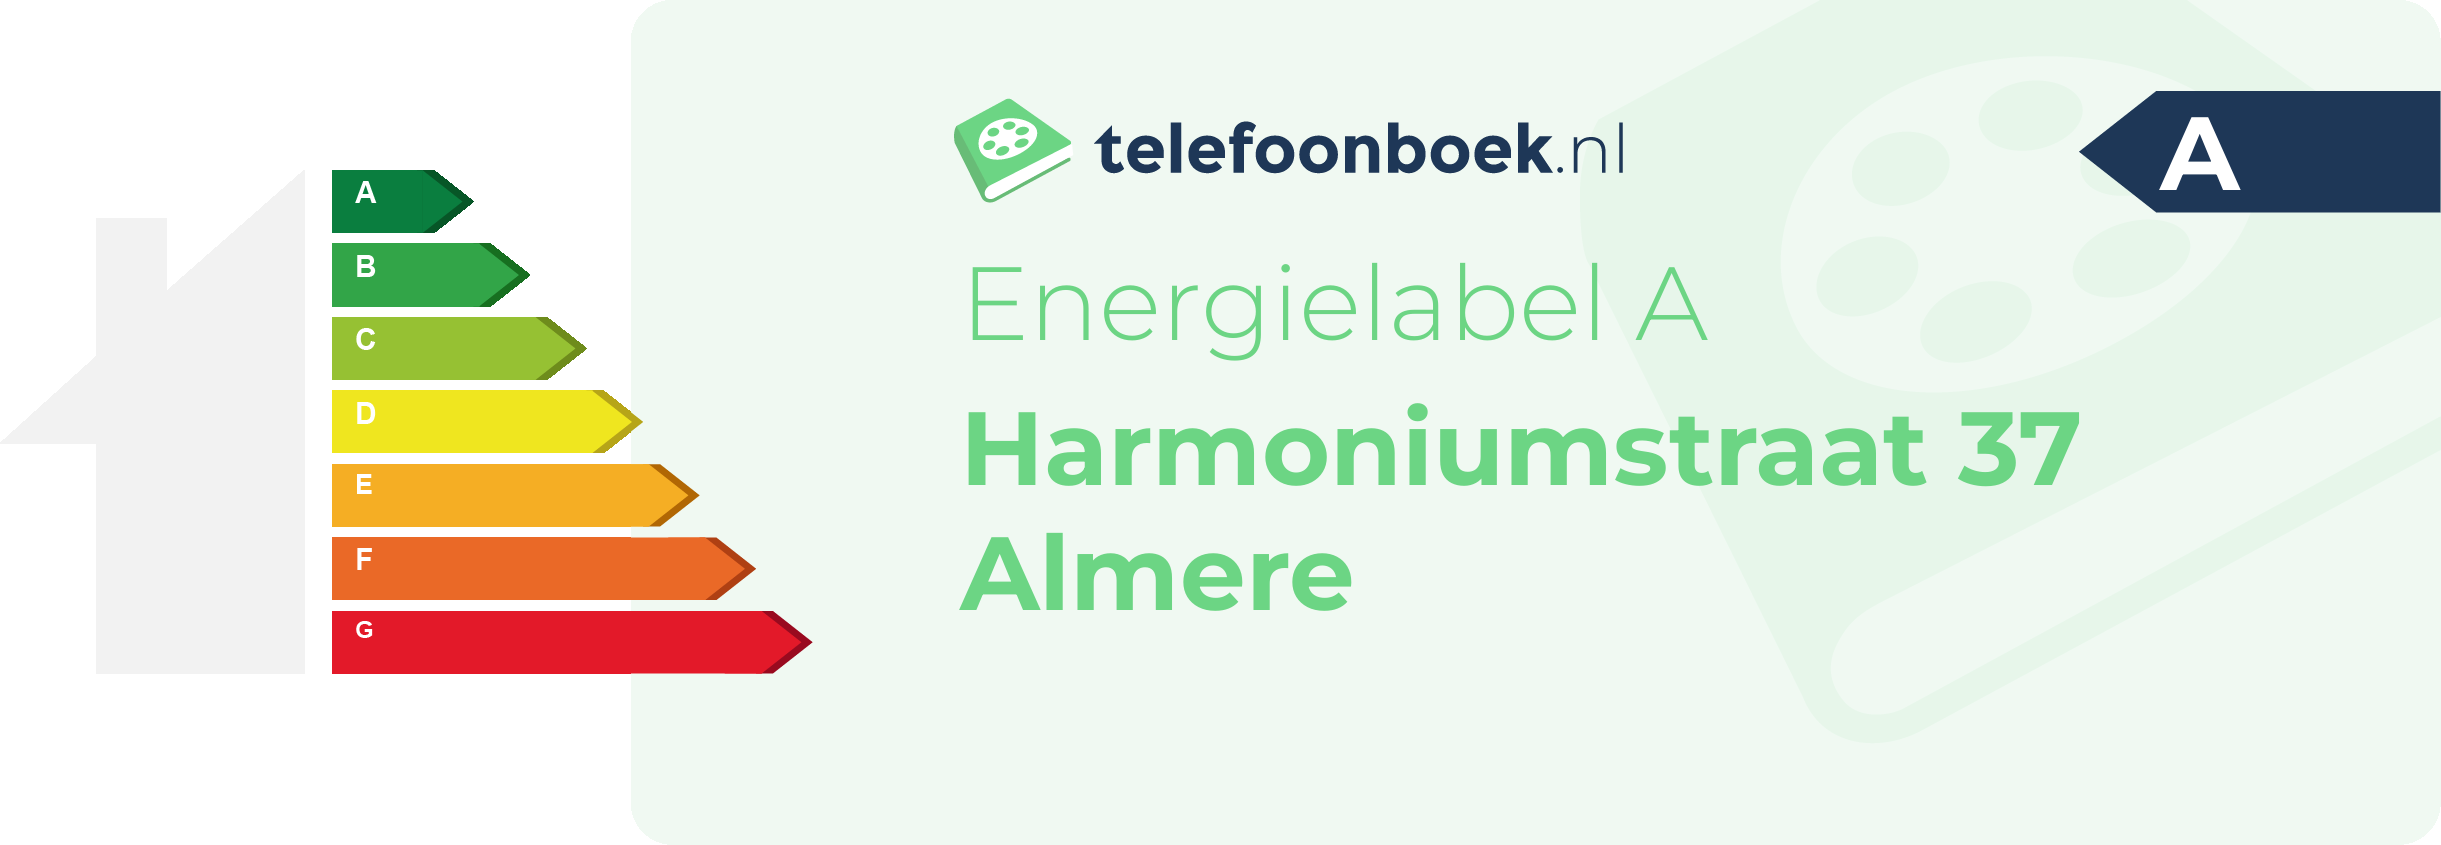 Energielabel Harmoniumstraat 37 Almere